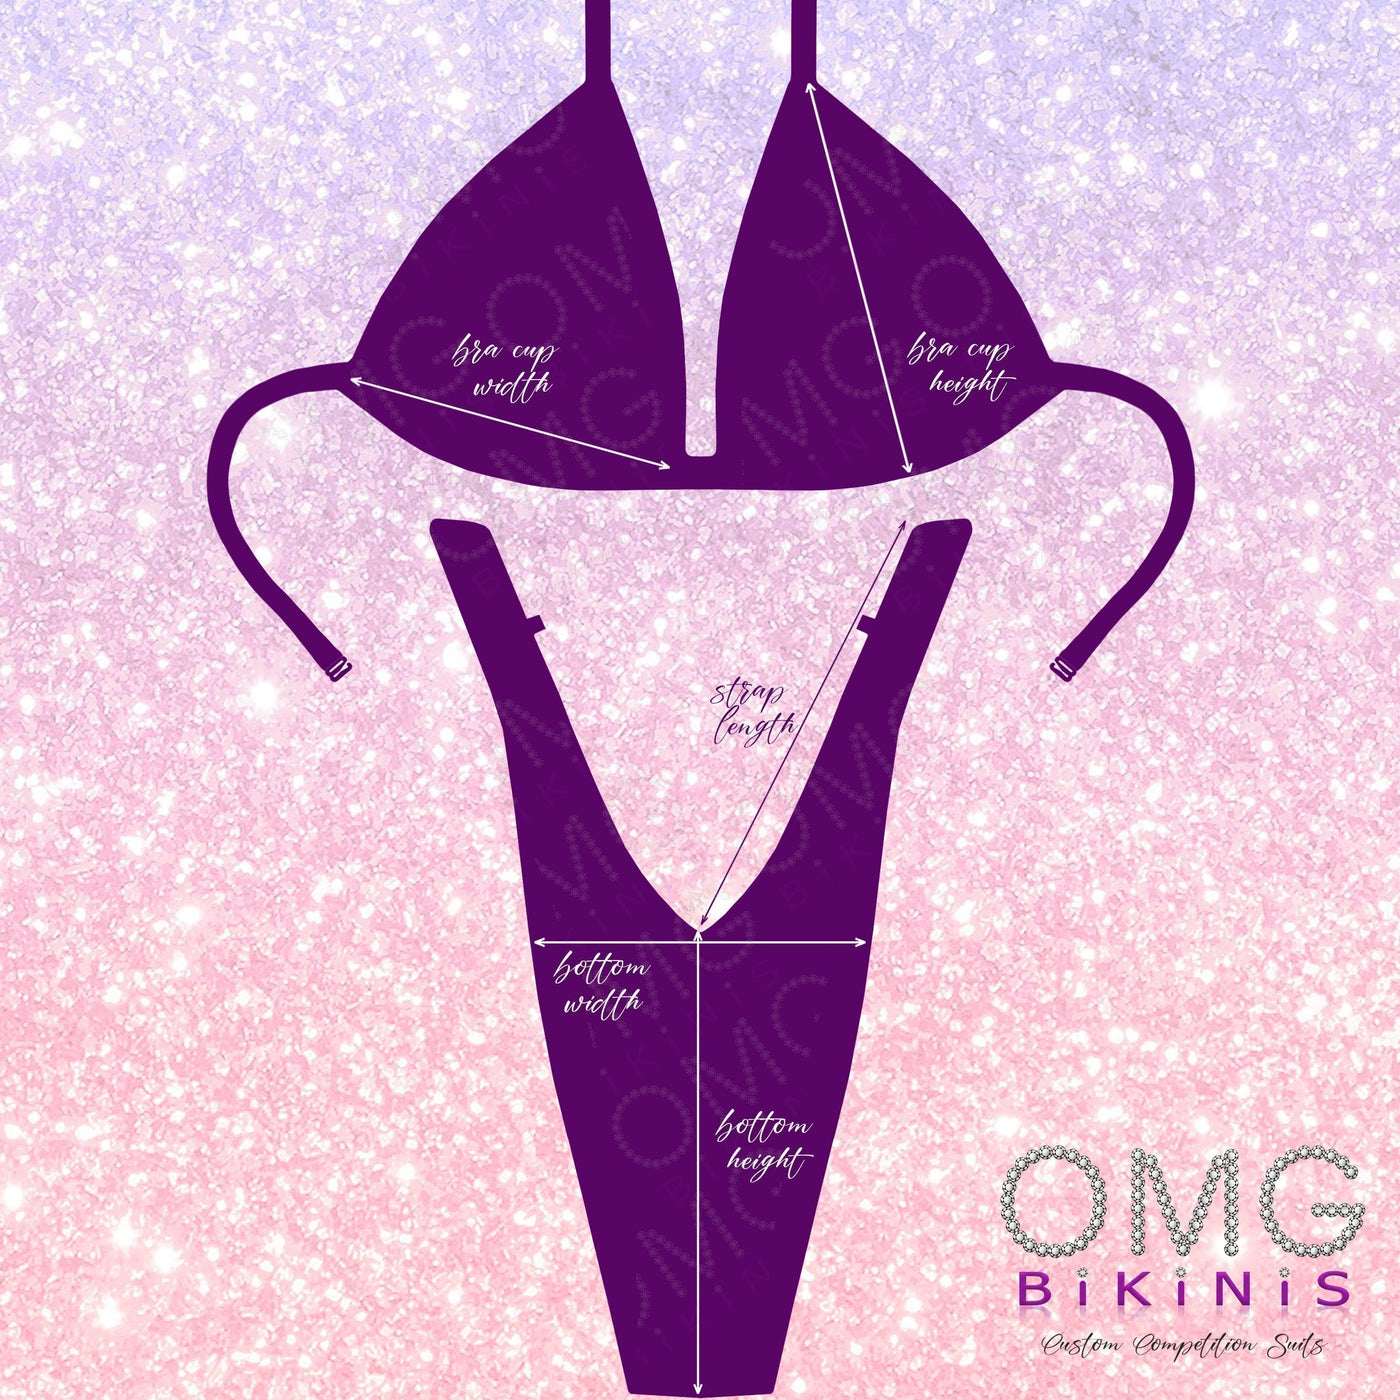 Uma Figure/WPD Competition Suit S/S | OMG Bikinis Rentals